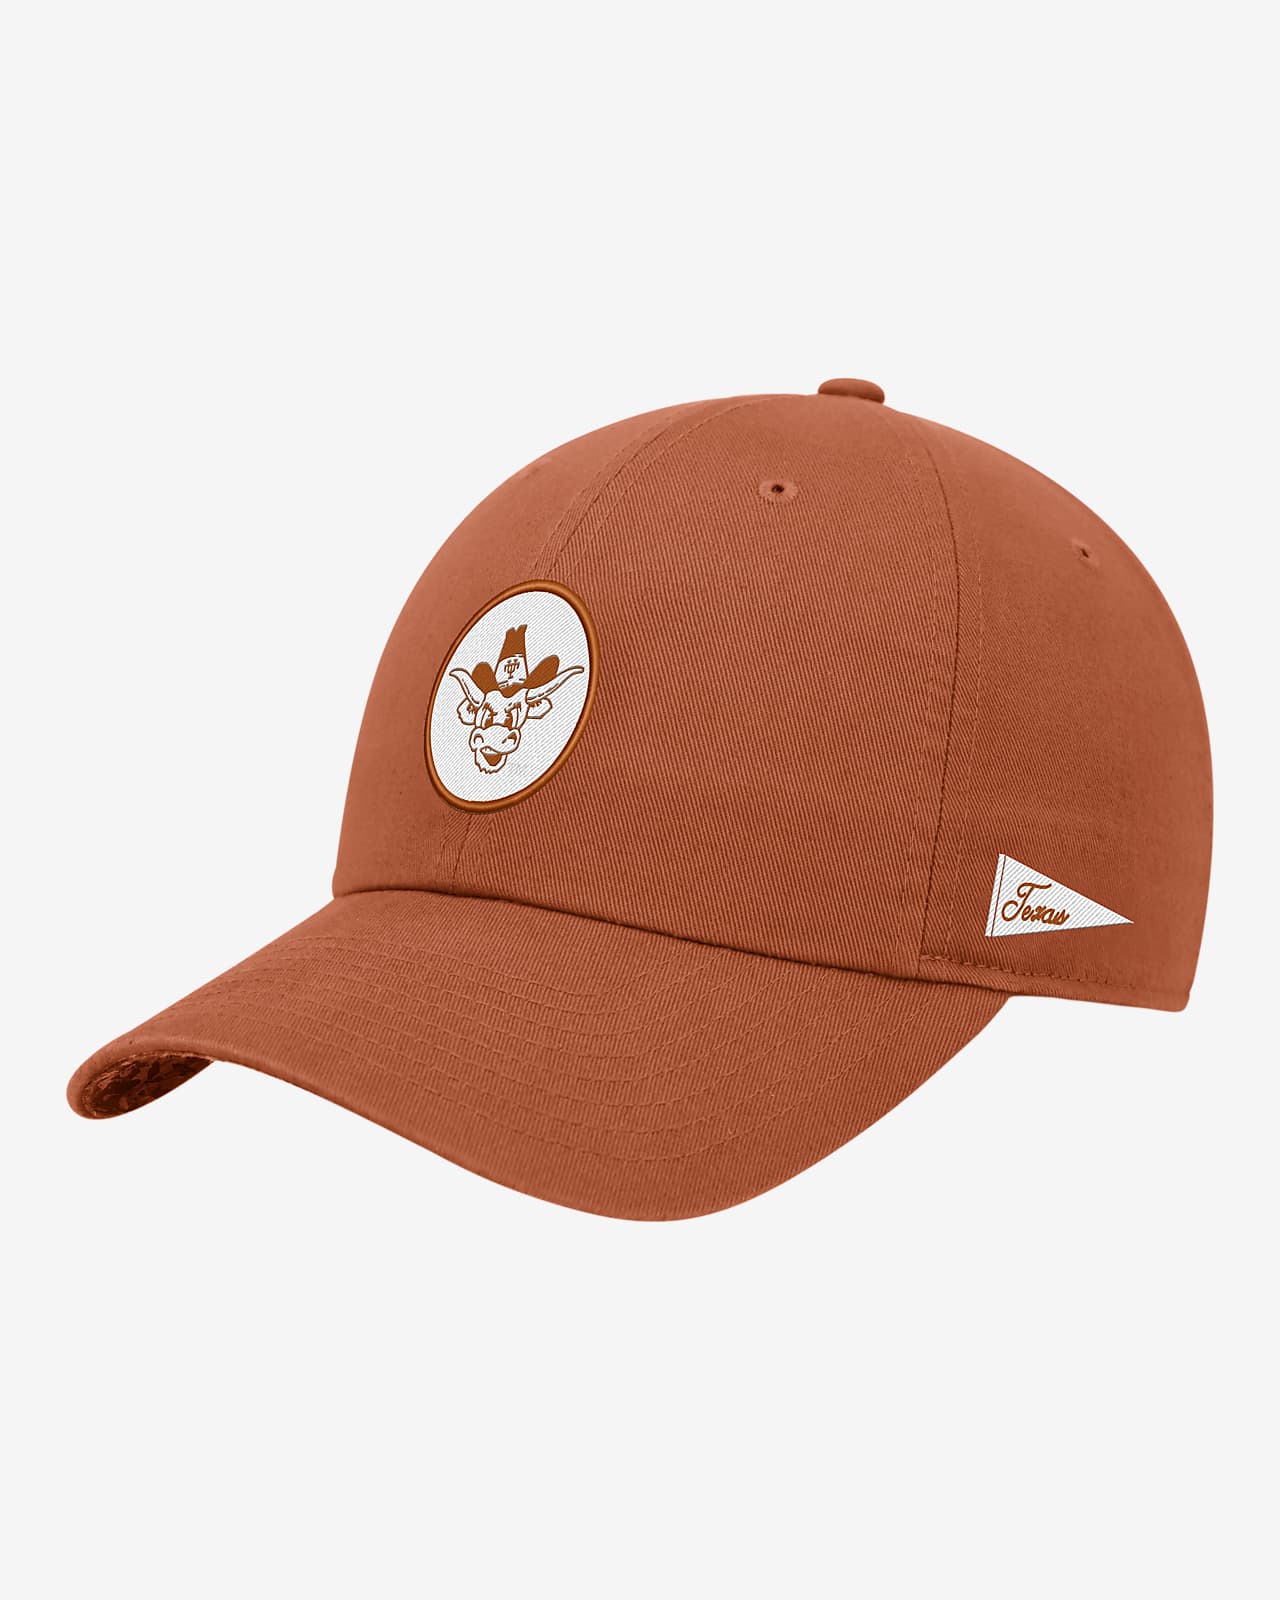 Gorra universitaria Nike ajustable con logotipo de Texas